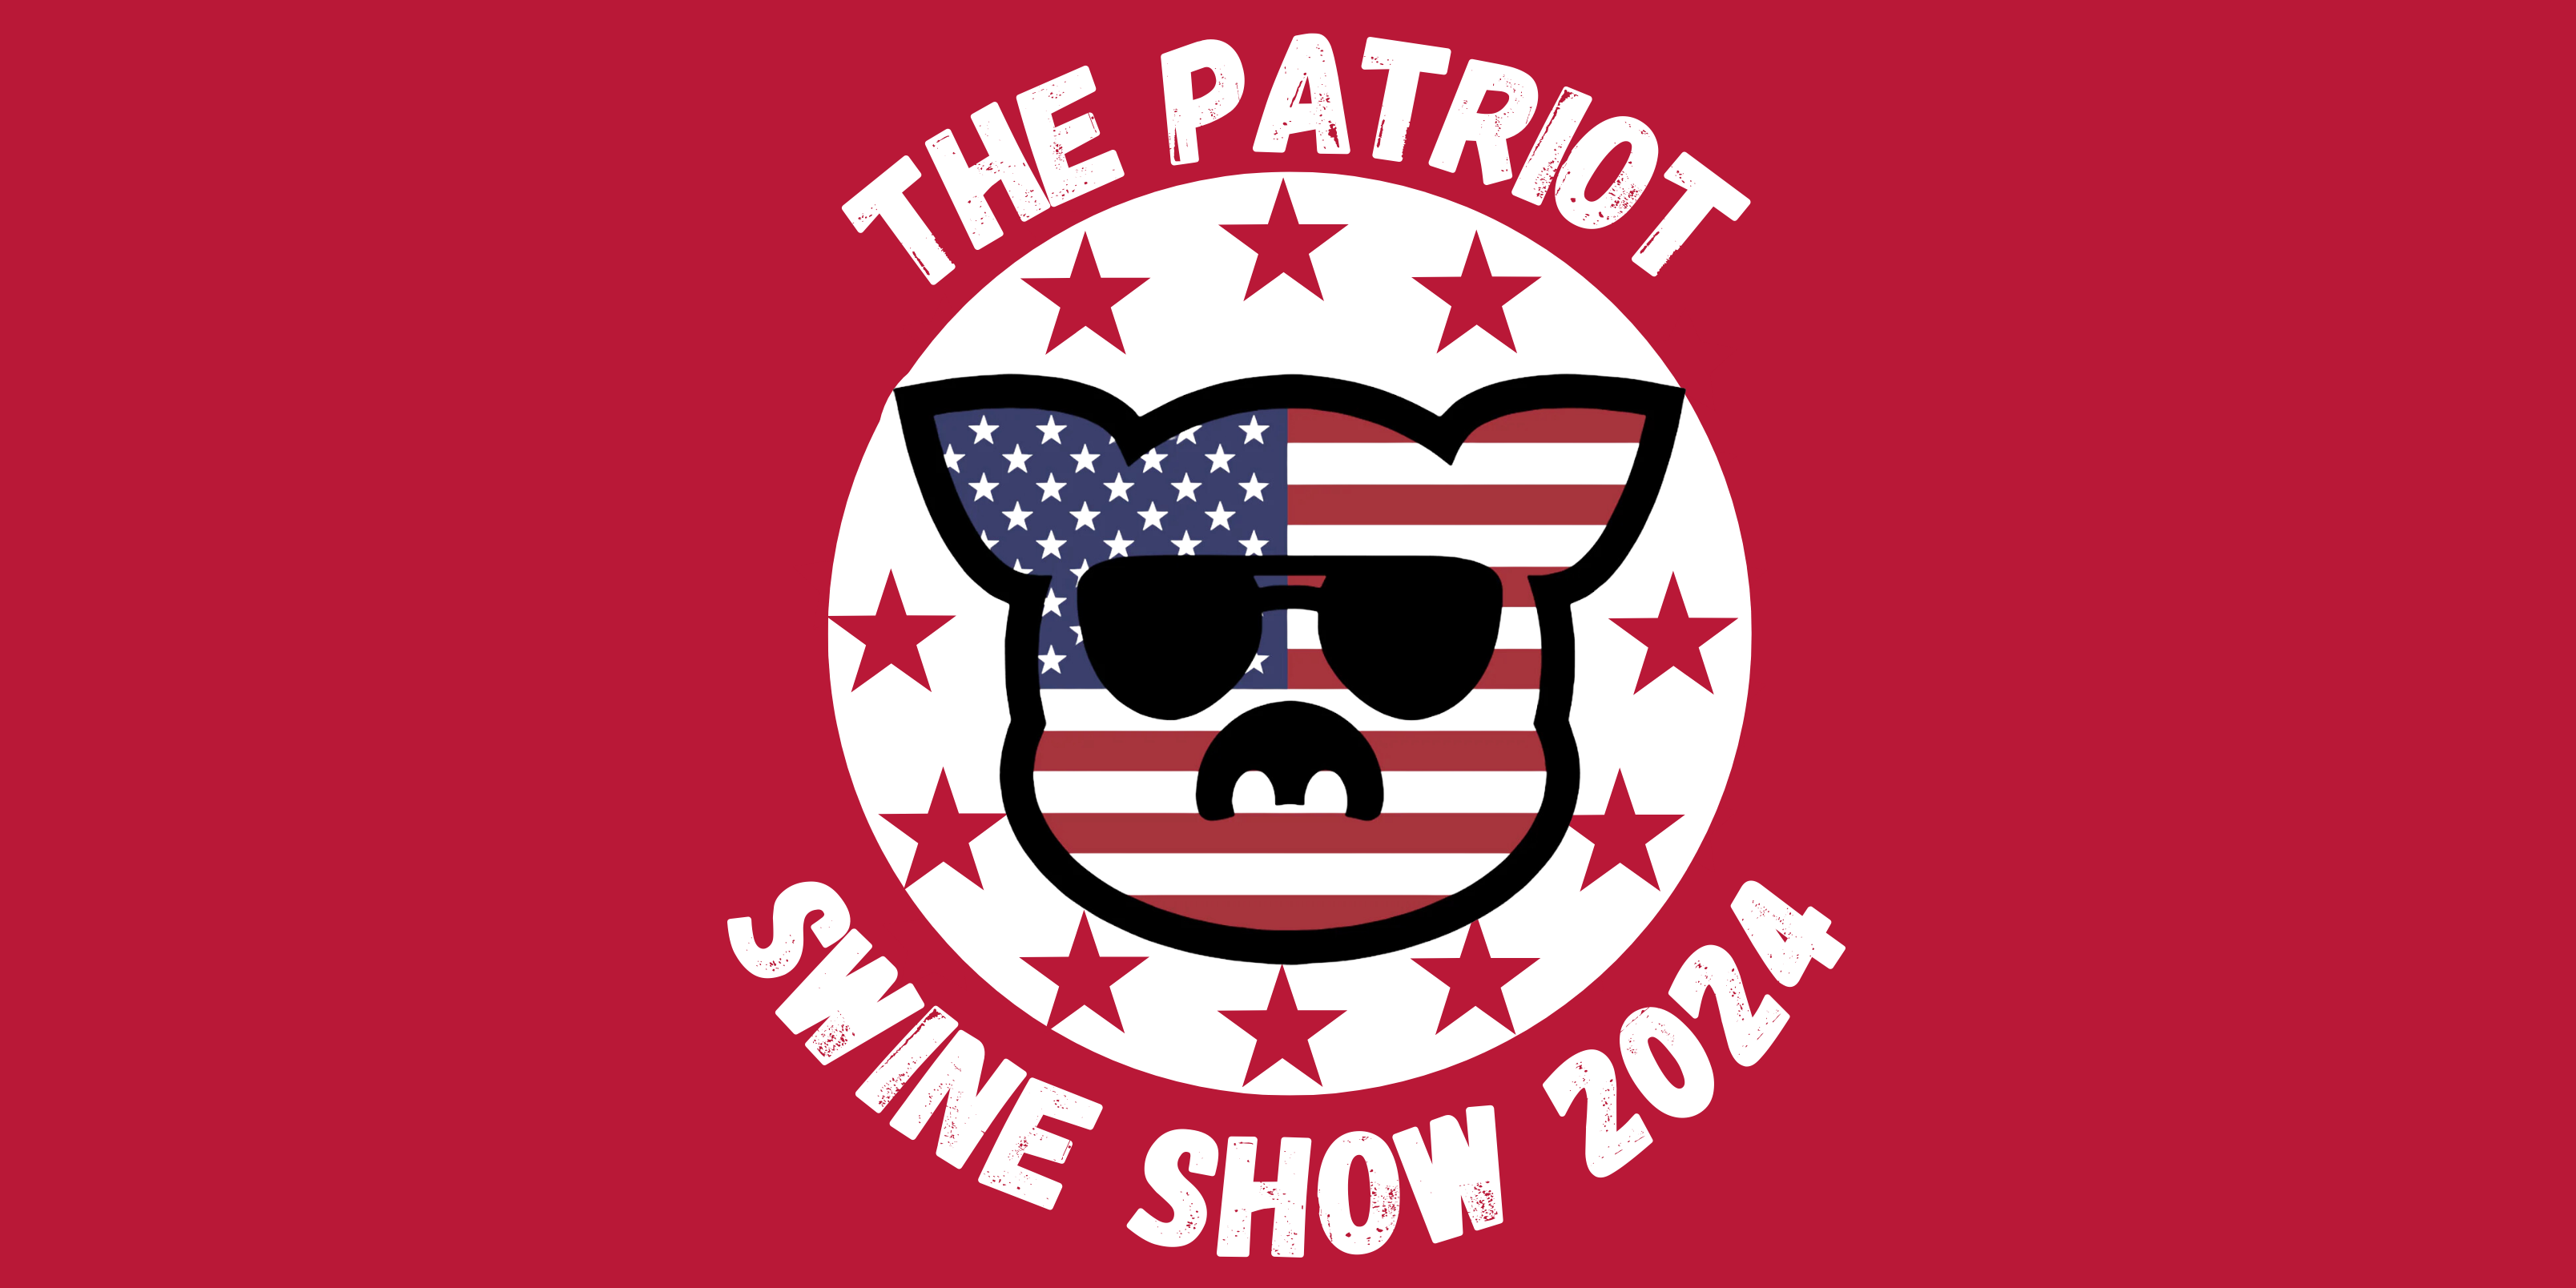 Image for The Patriot Swine Show Jefferson Ga